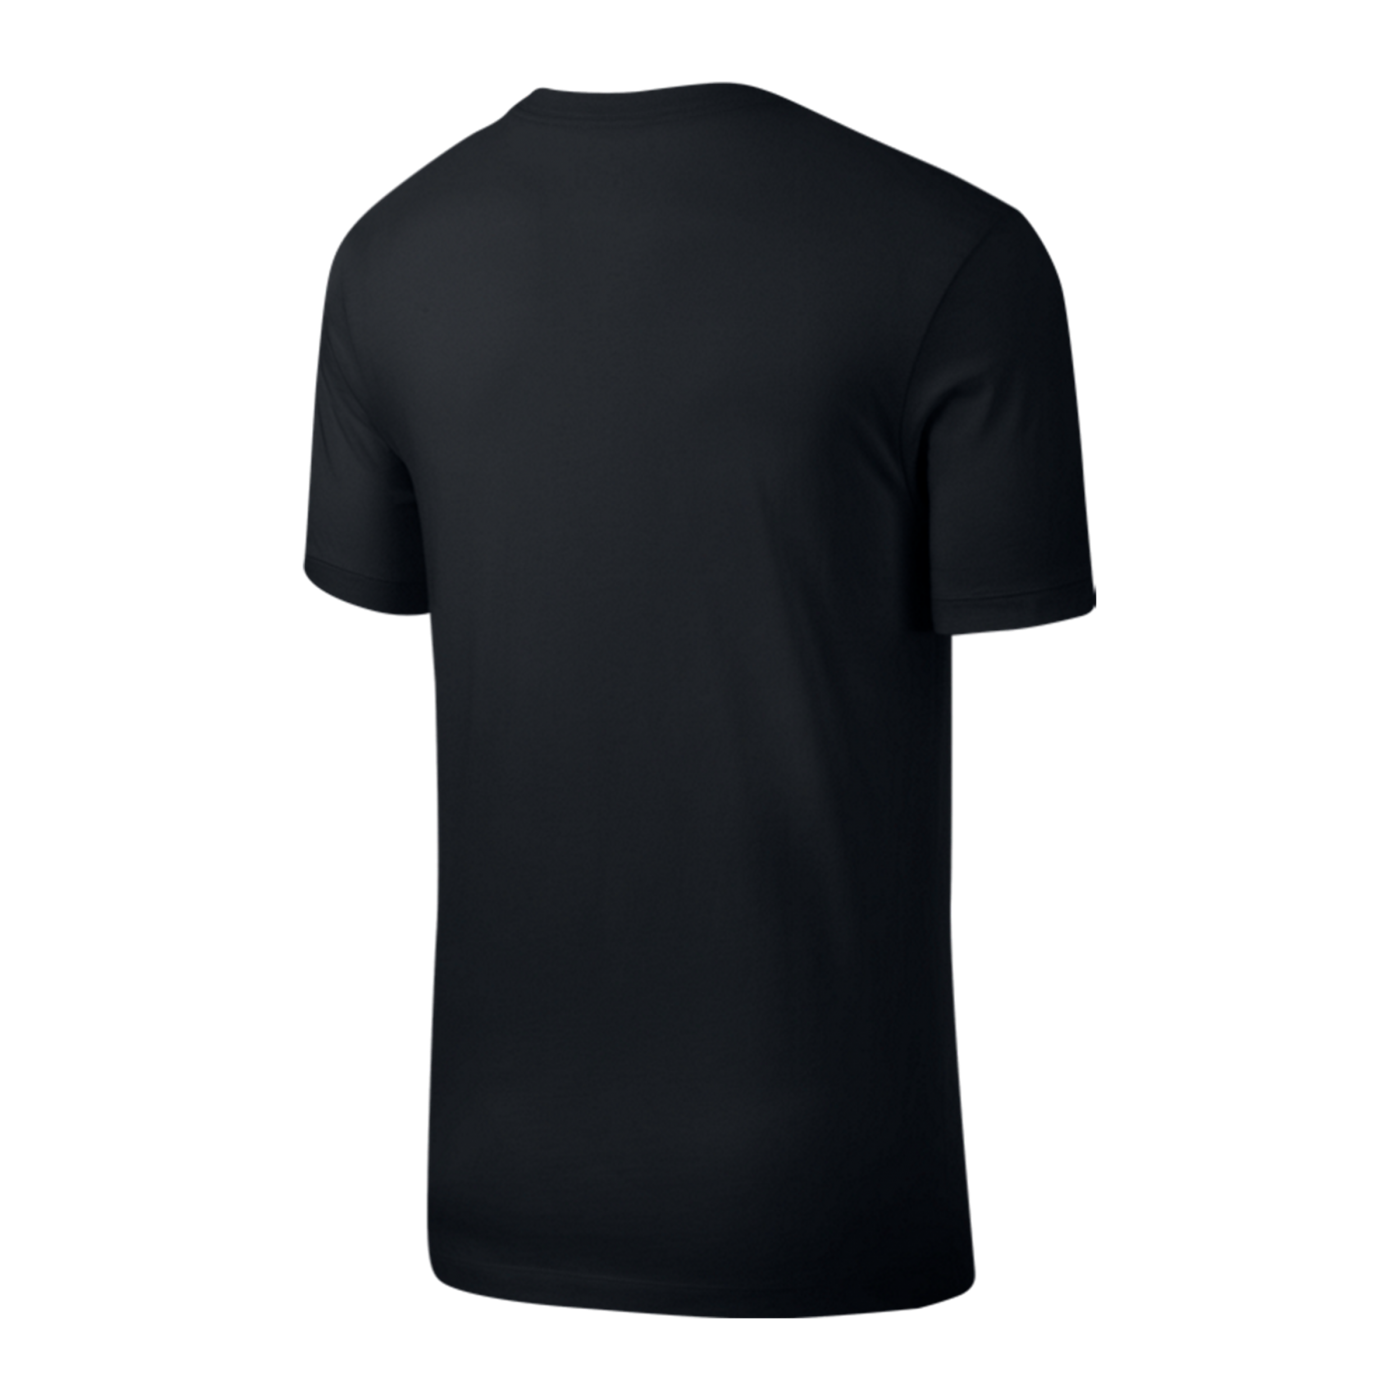 Nike Tee T-Shirt Schwarz Weiss F013 | | Freizeitoutfit | Shortsleeve